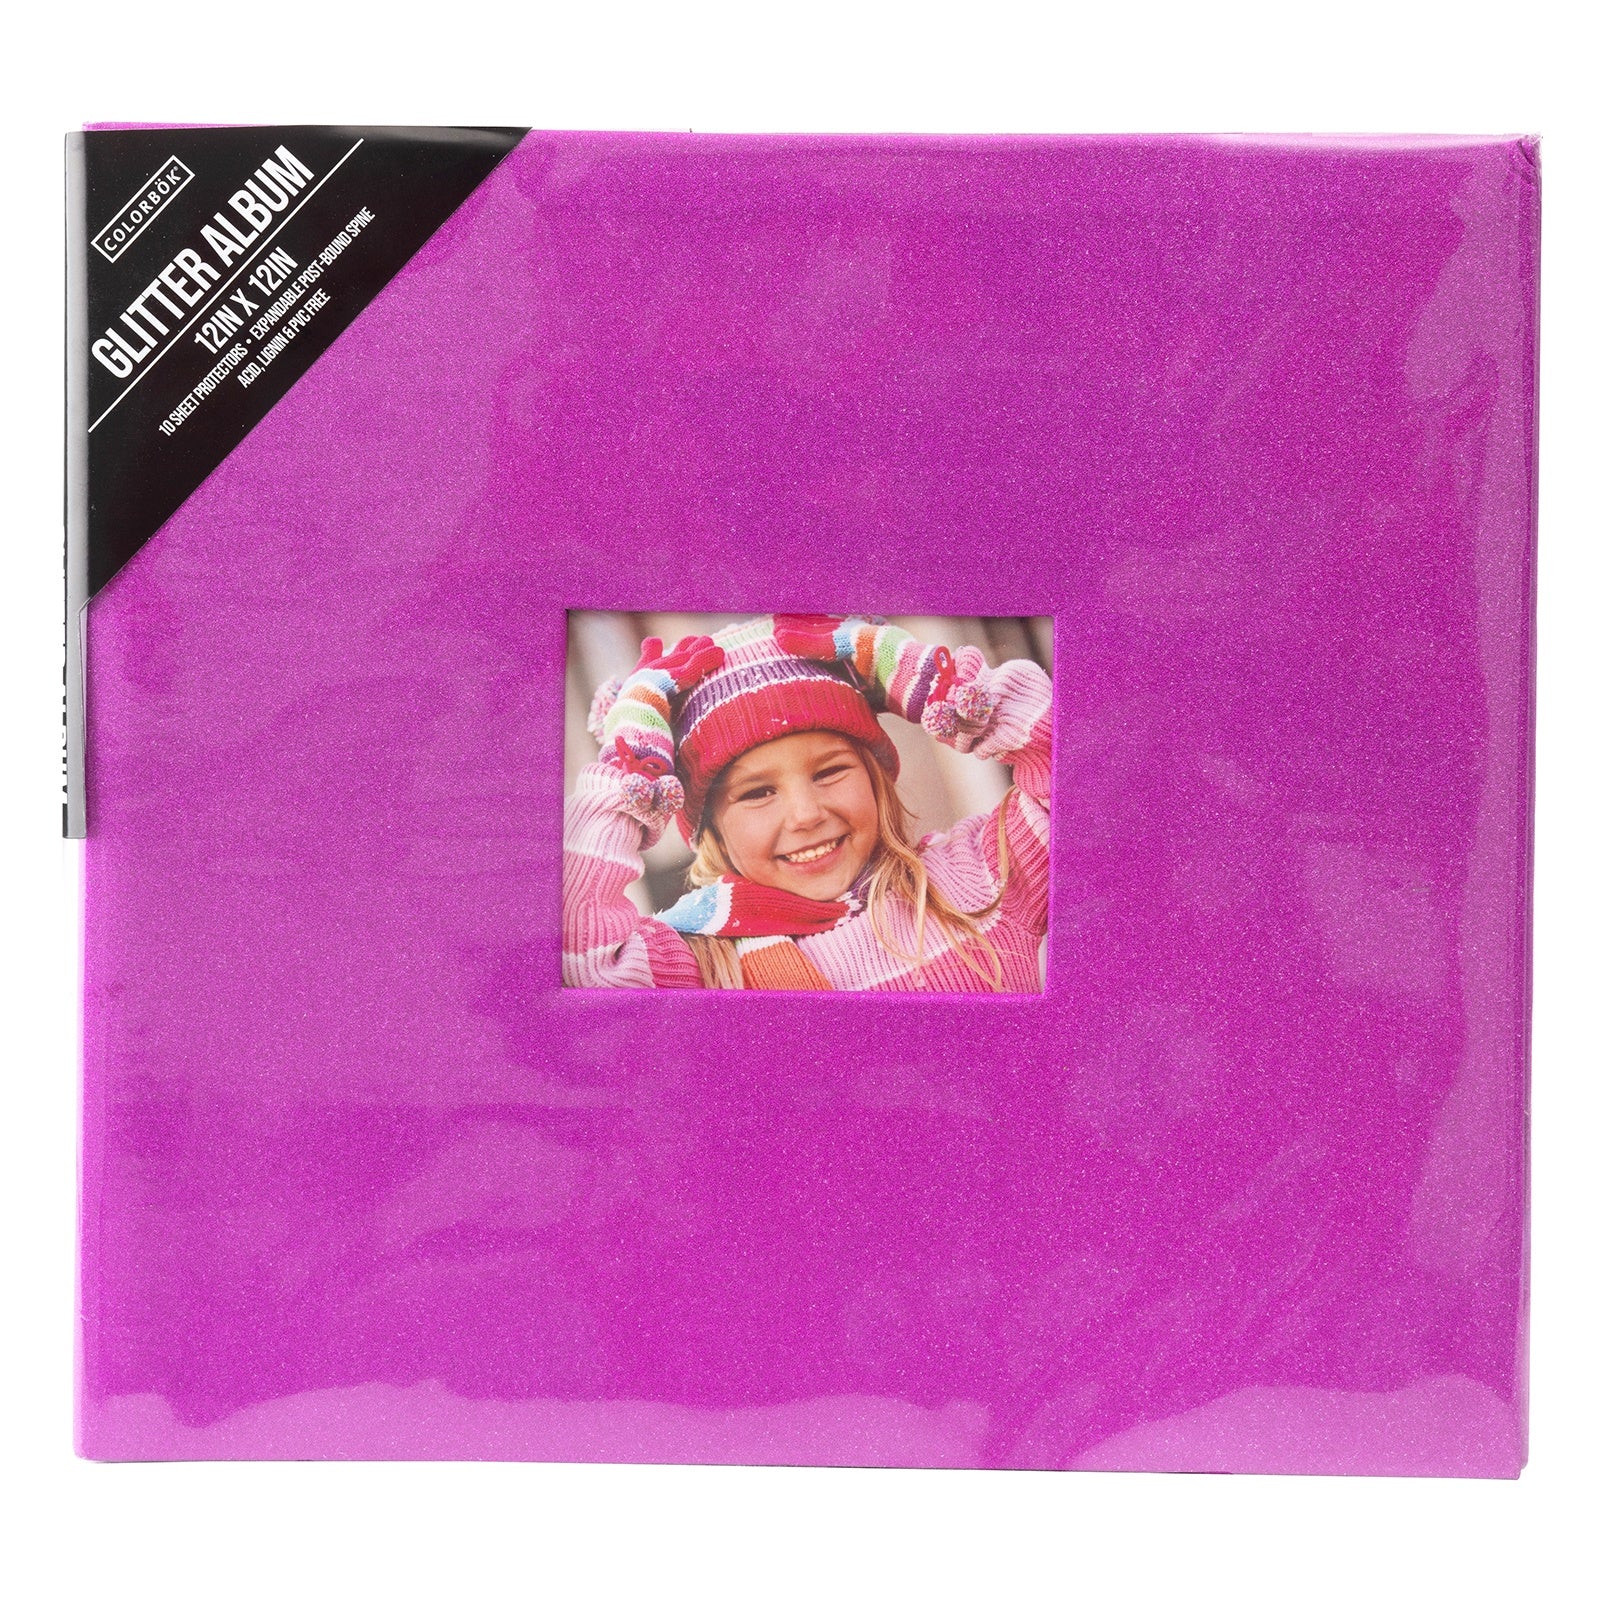 Colorbok Post Bound Fabric Album 12x12 Red